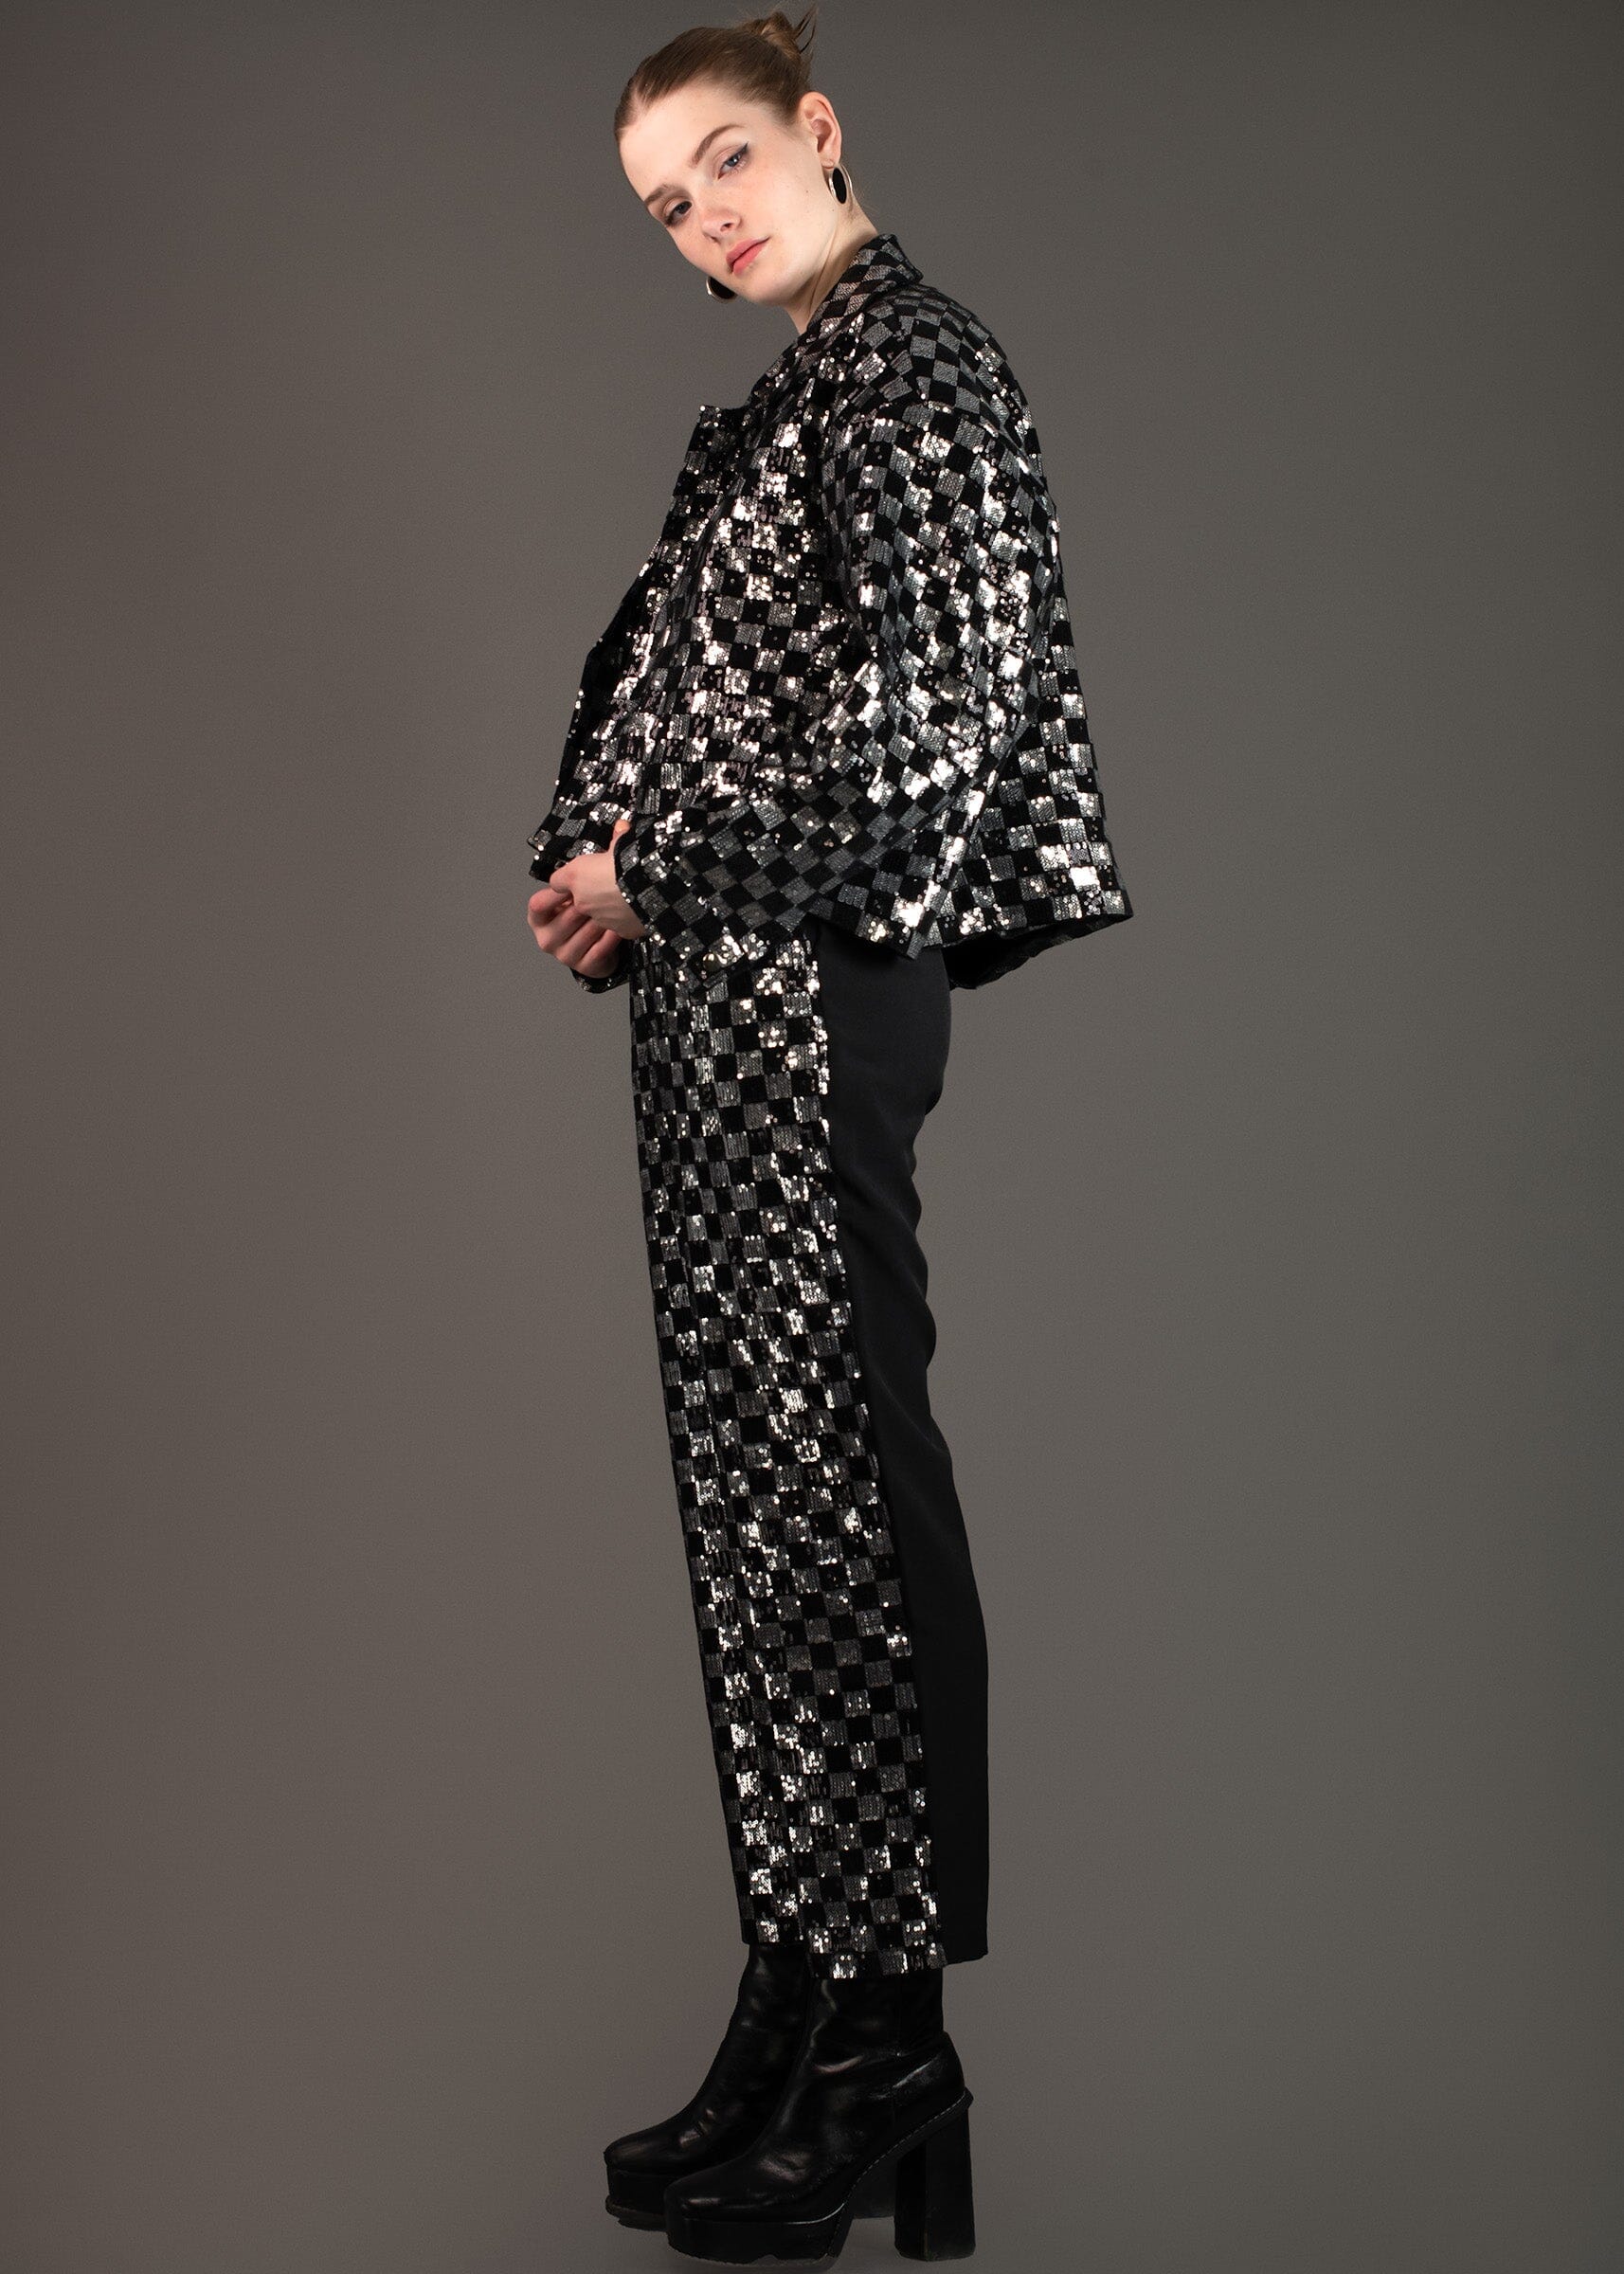 Sequin Checker Dress Pants Pants Kate Hewko 